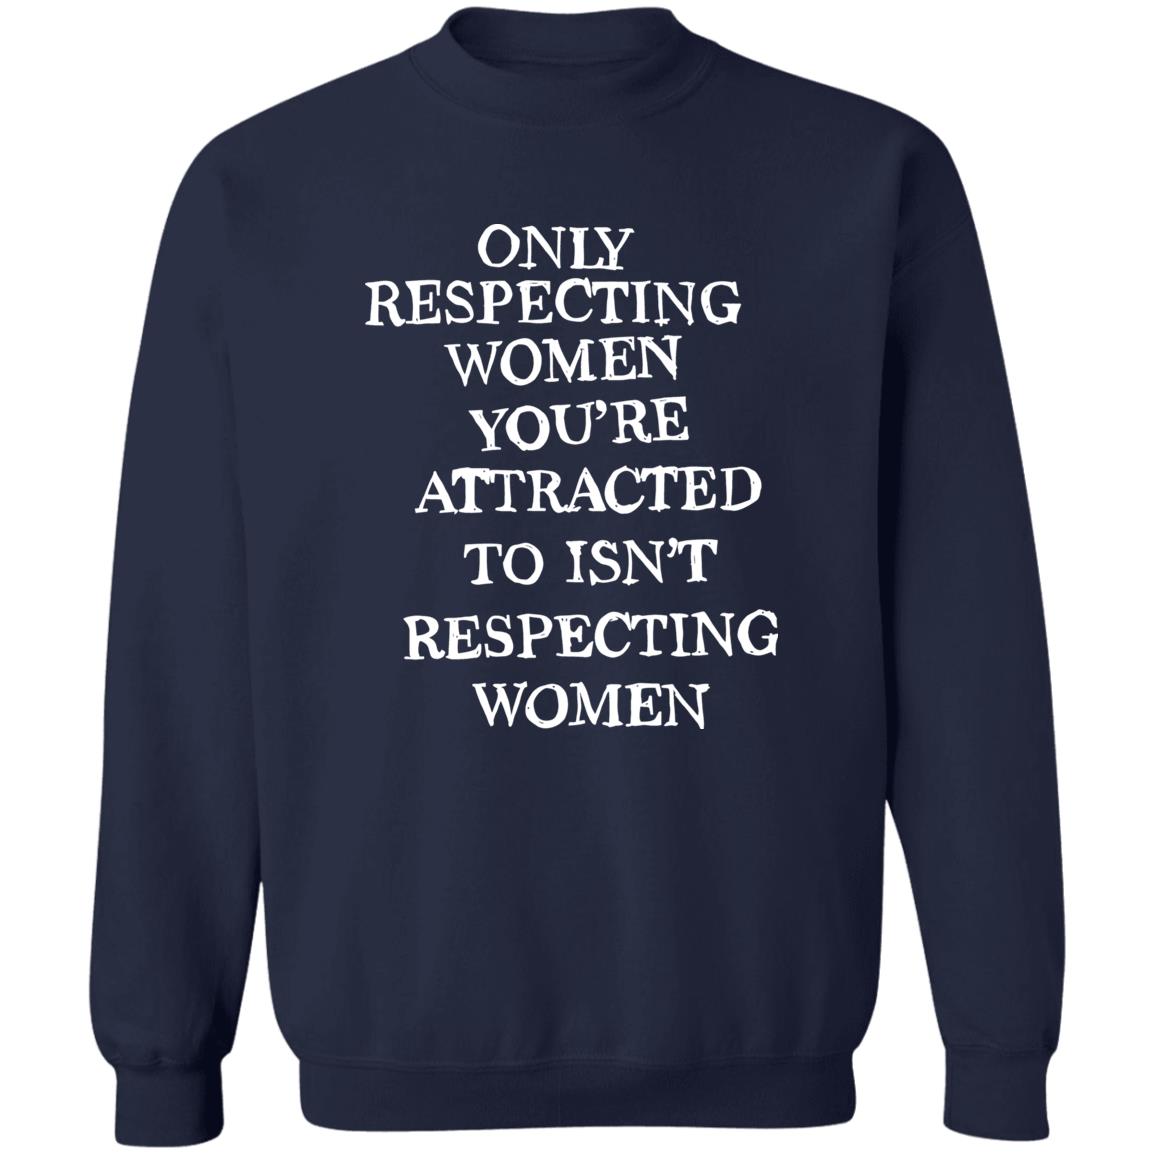 Only Respecting Women You’re Attracted To Isn’t Respecting Women Sweatshirt